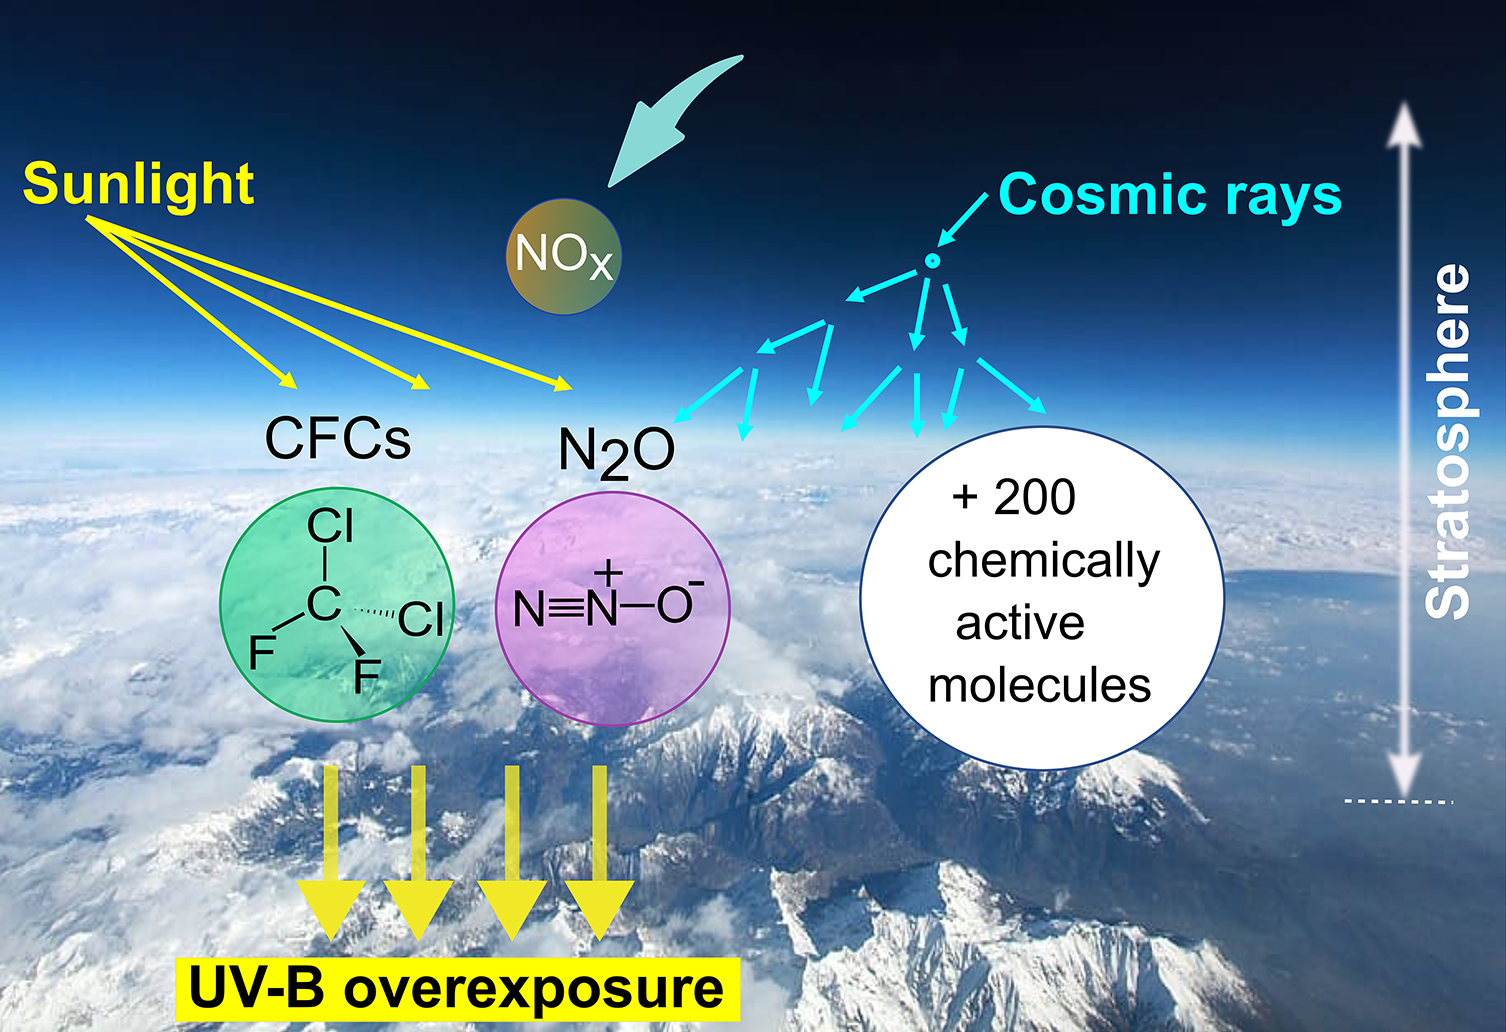 Impact of increased cosmic rays, UV radiation and fragility of ozone